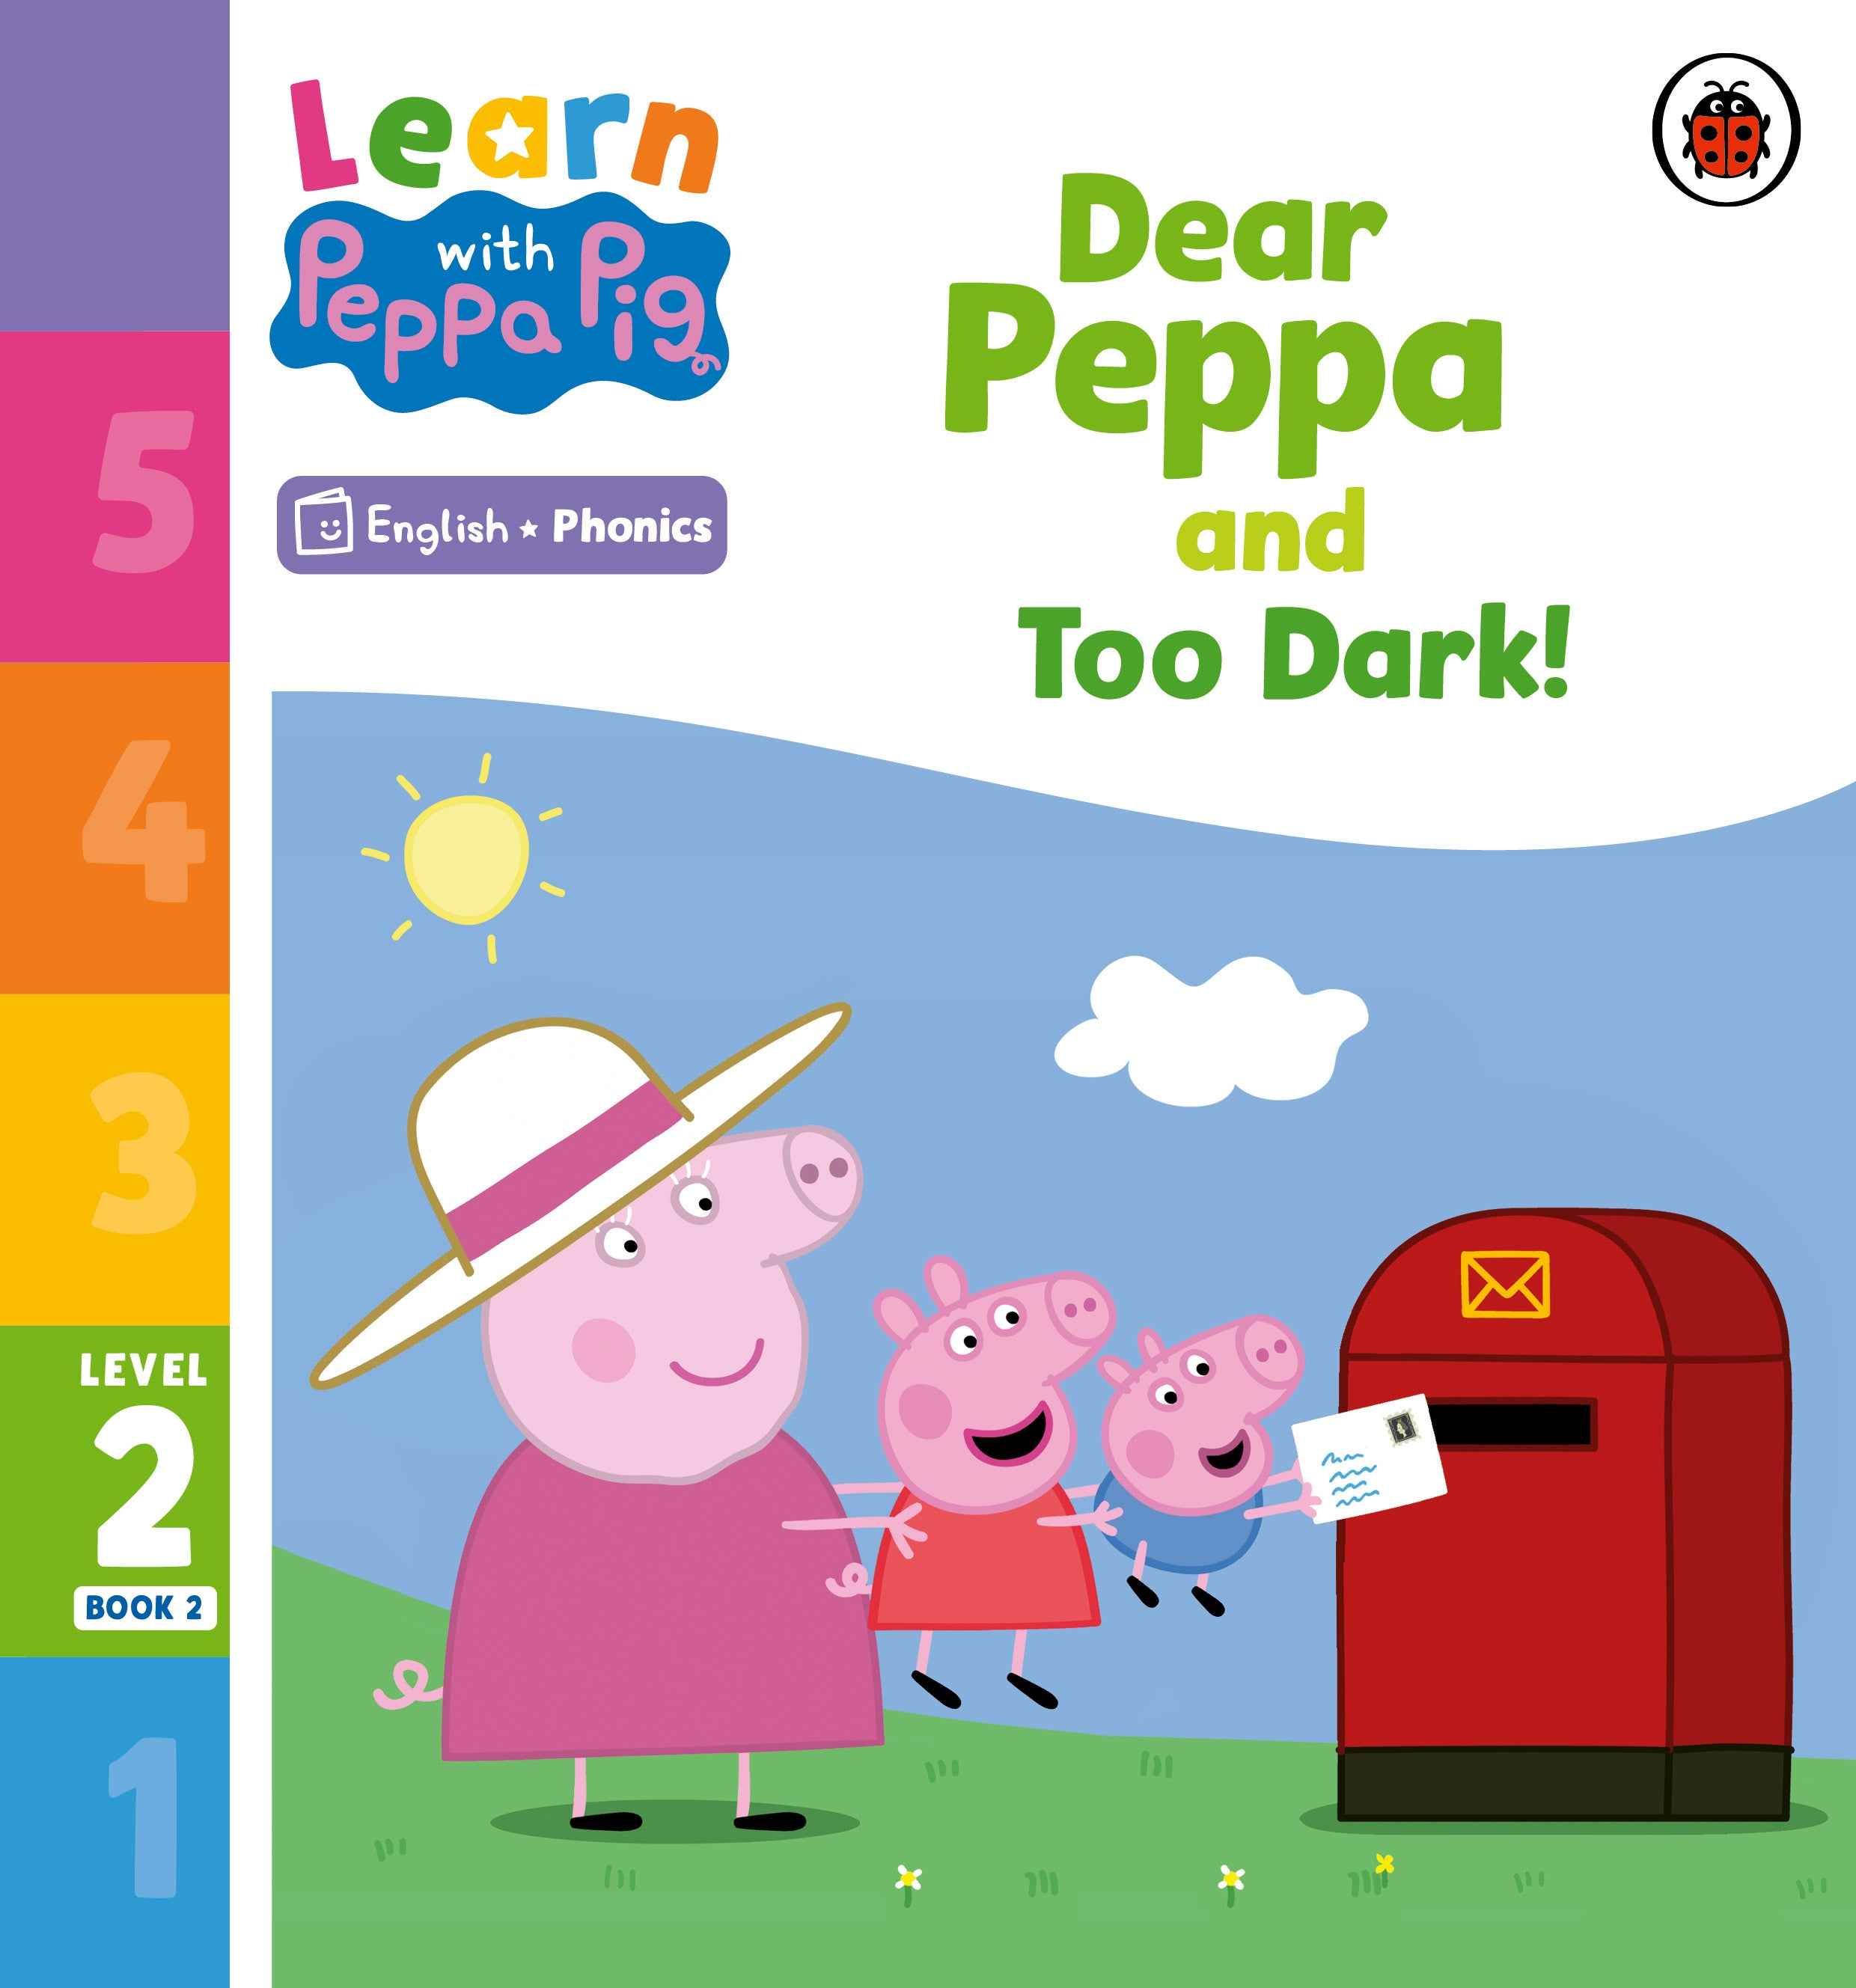 Dear Peppa and Too Dark!